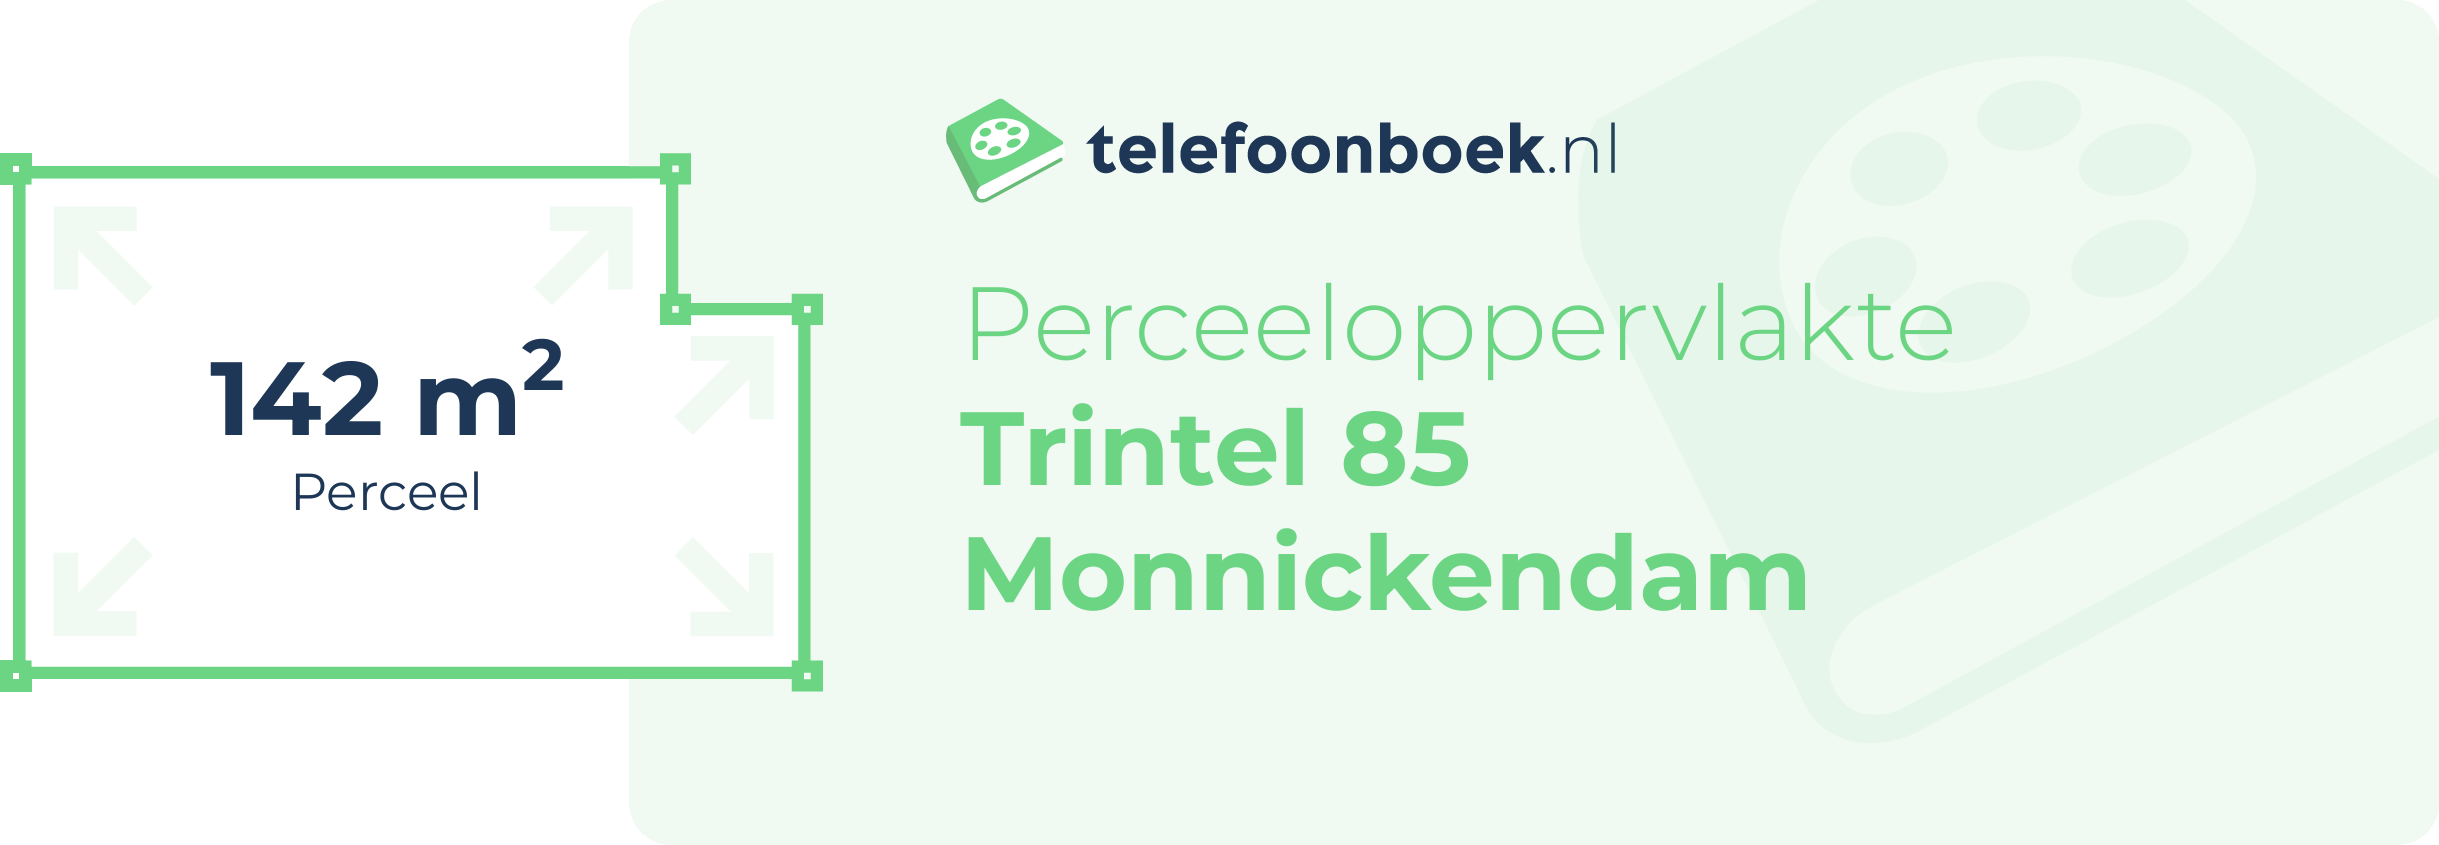 Perceeloppervlakte Trintel 85 Monnickendam